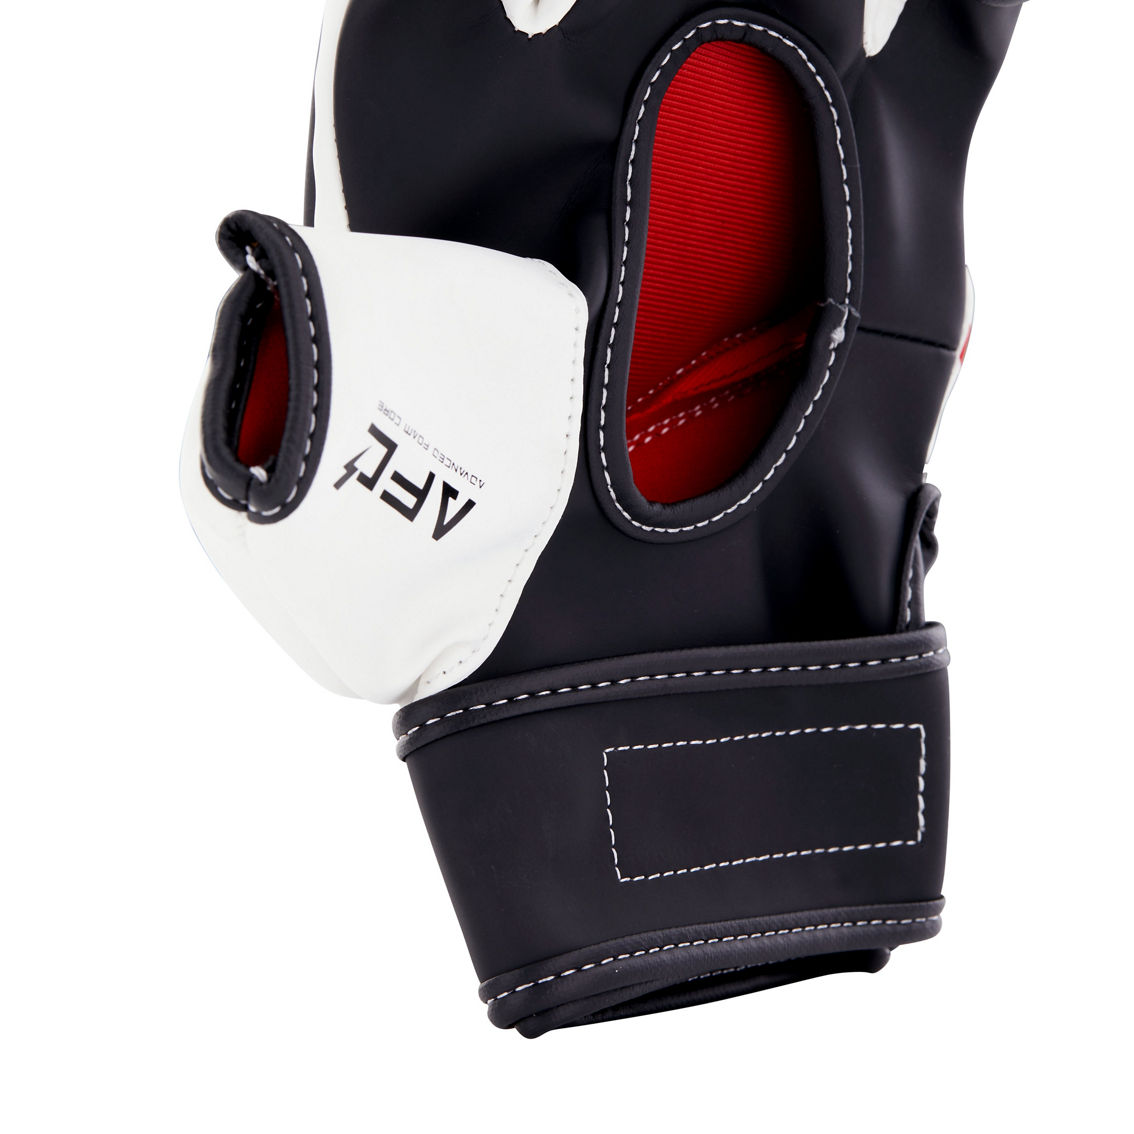 BRAVE Mens Comp MMA Glove L/XL - Image 1 of 2